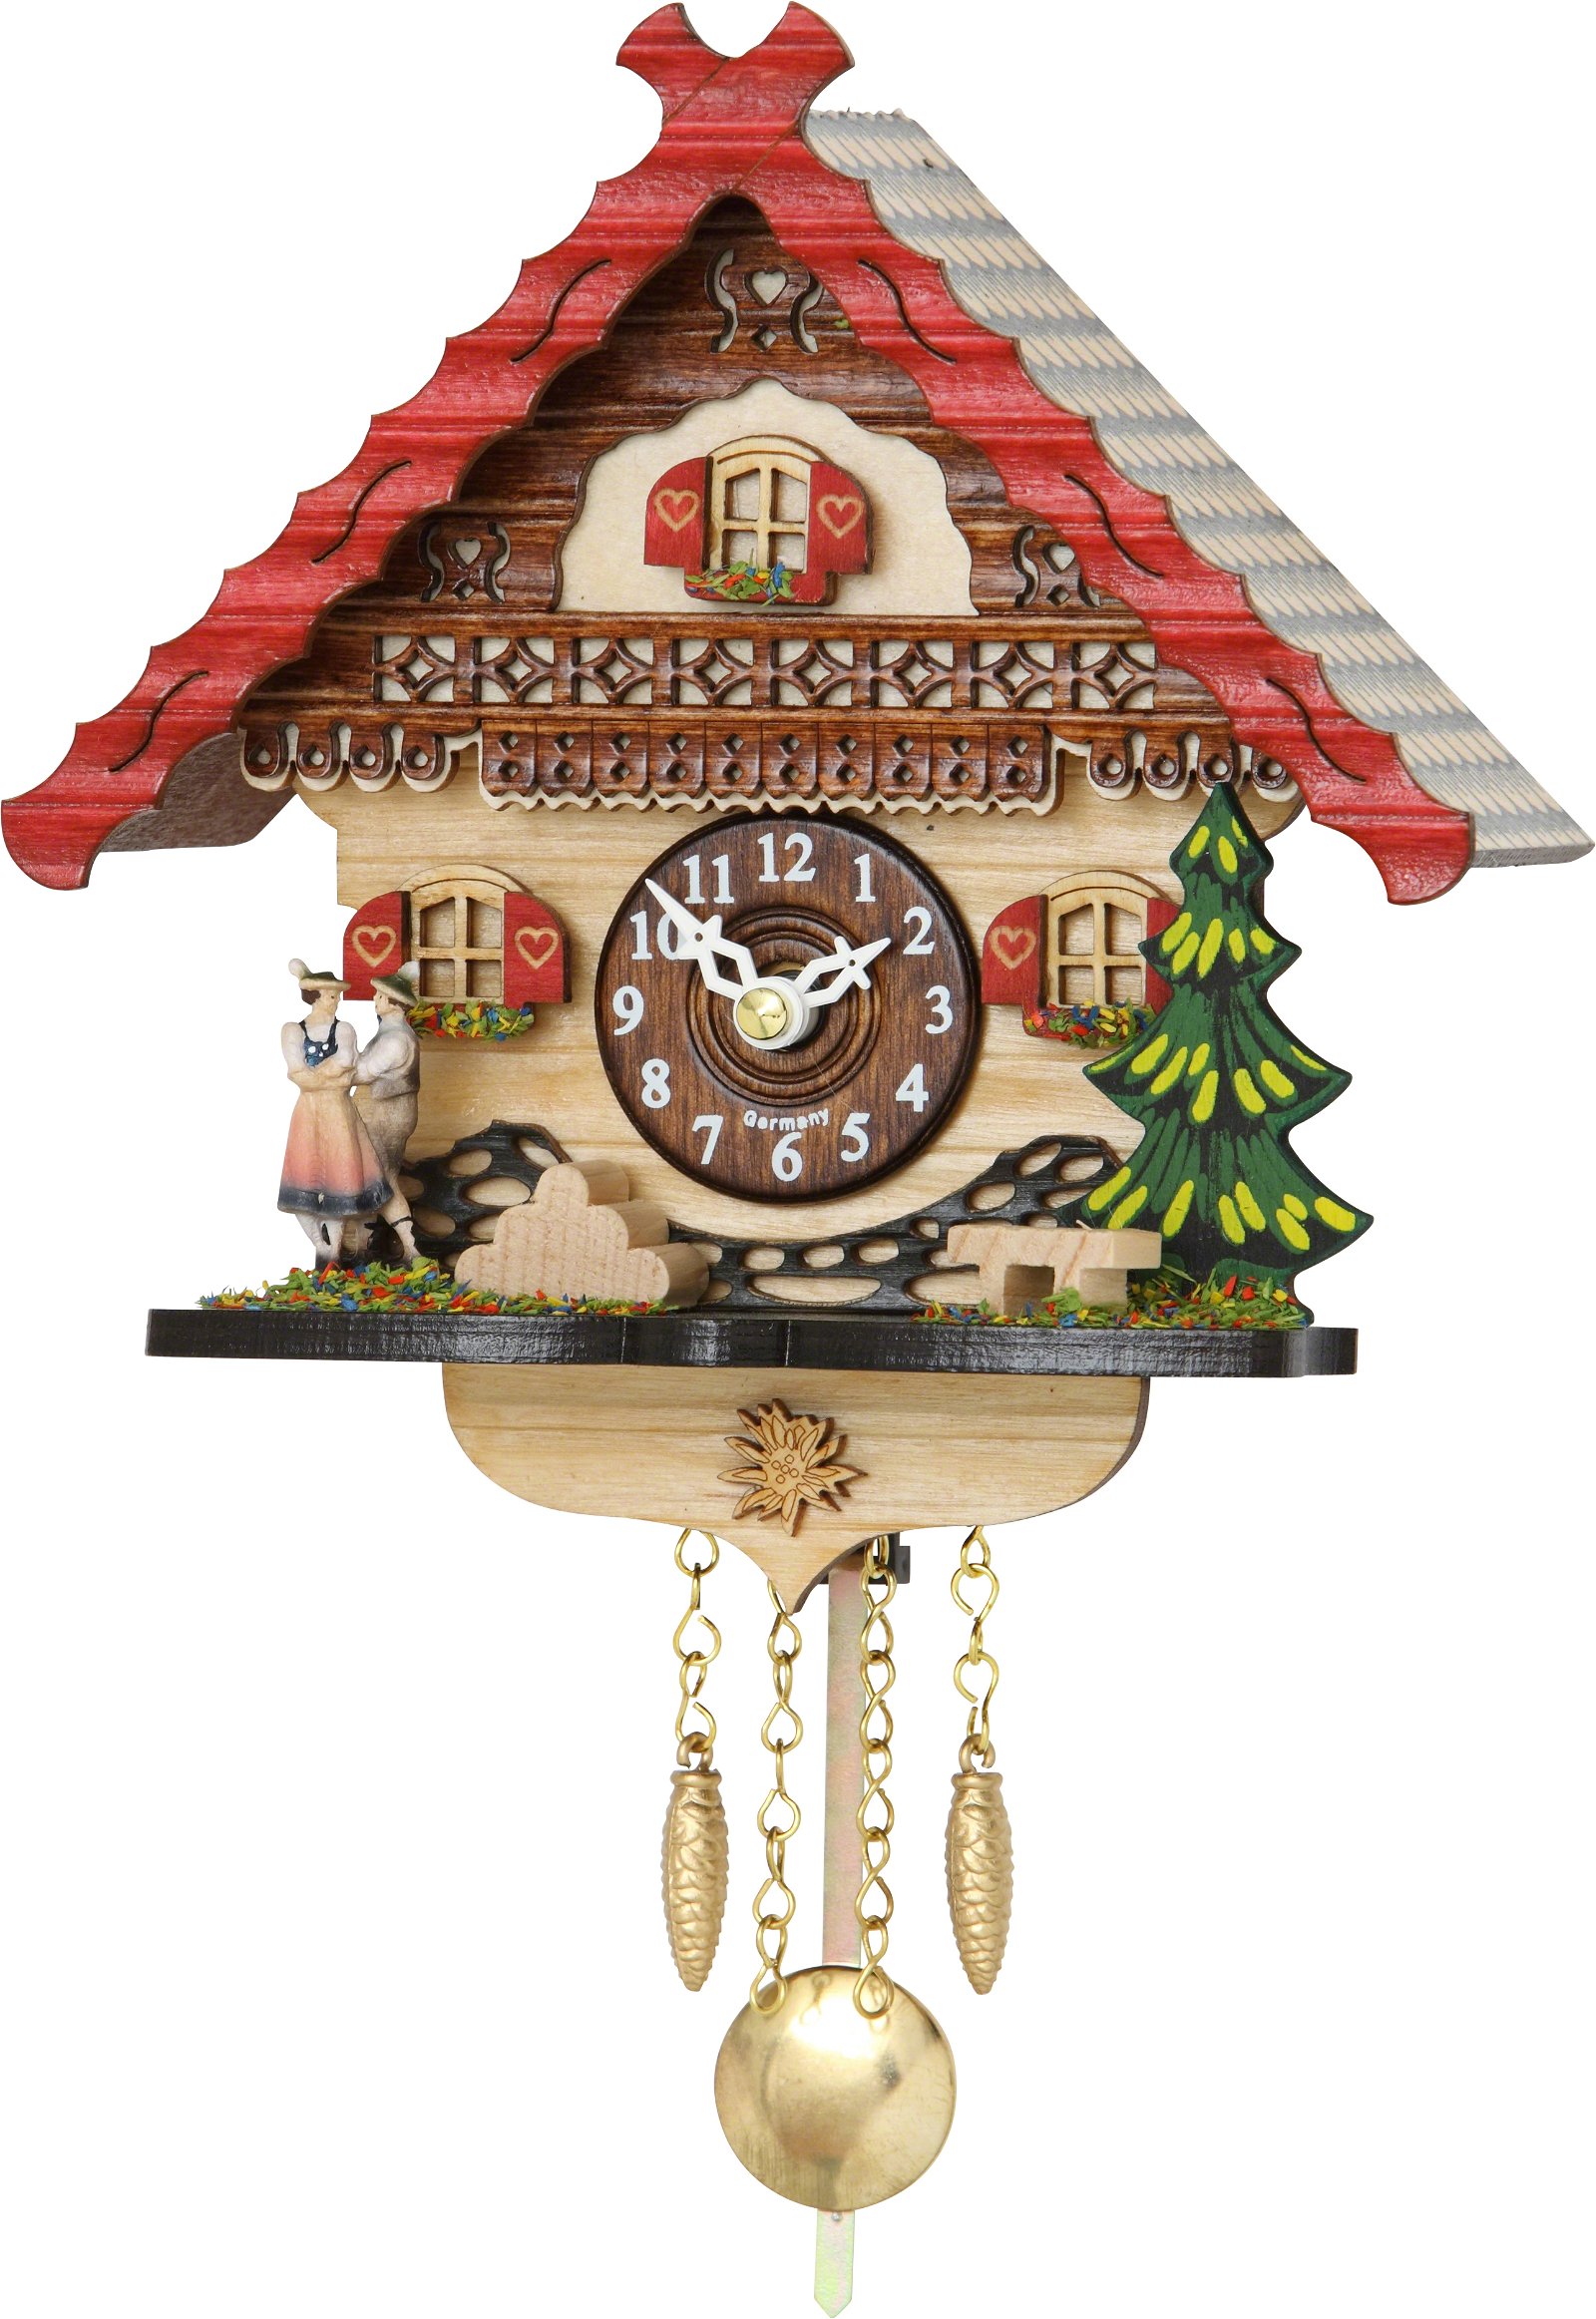 Trenkle Kuckulino Black Forest Clock Swiss House with quartz movement and cuckoo chime TU 2035 PQ 